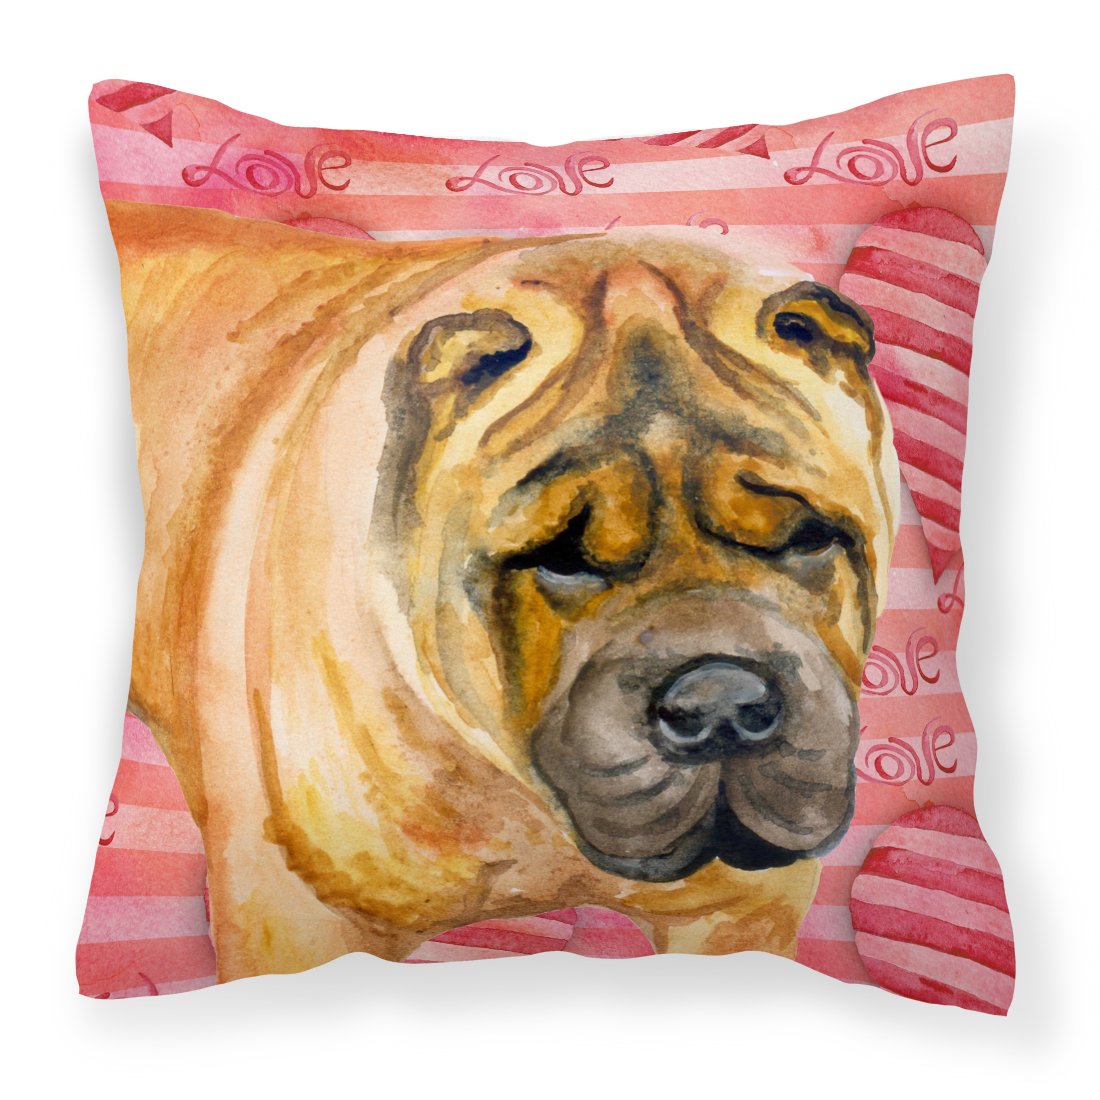 Shar Pei Love Fabric Decorative Pillow BB9748PW1818 by Caroline's Treasures